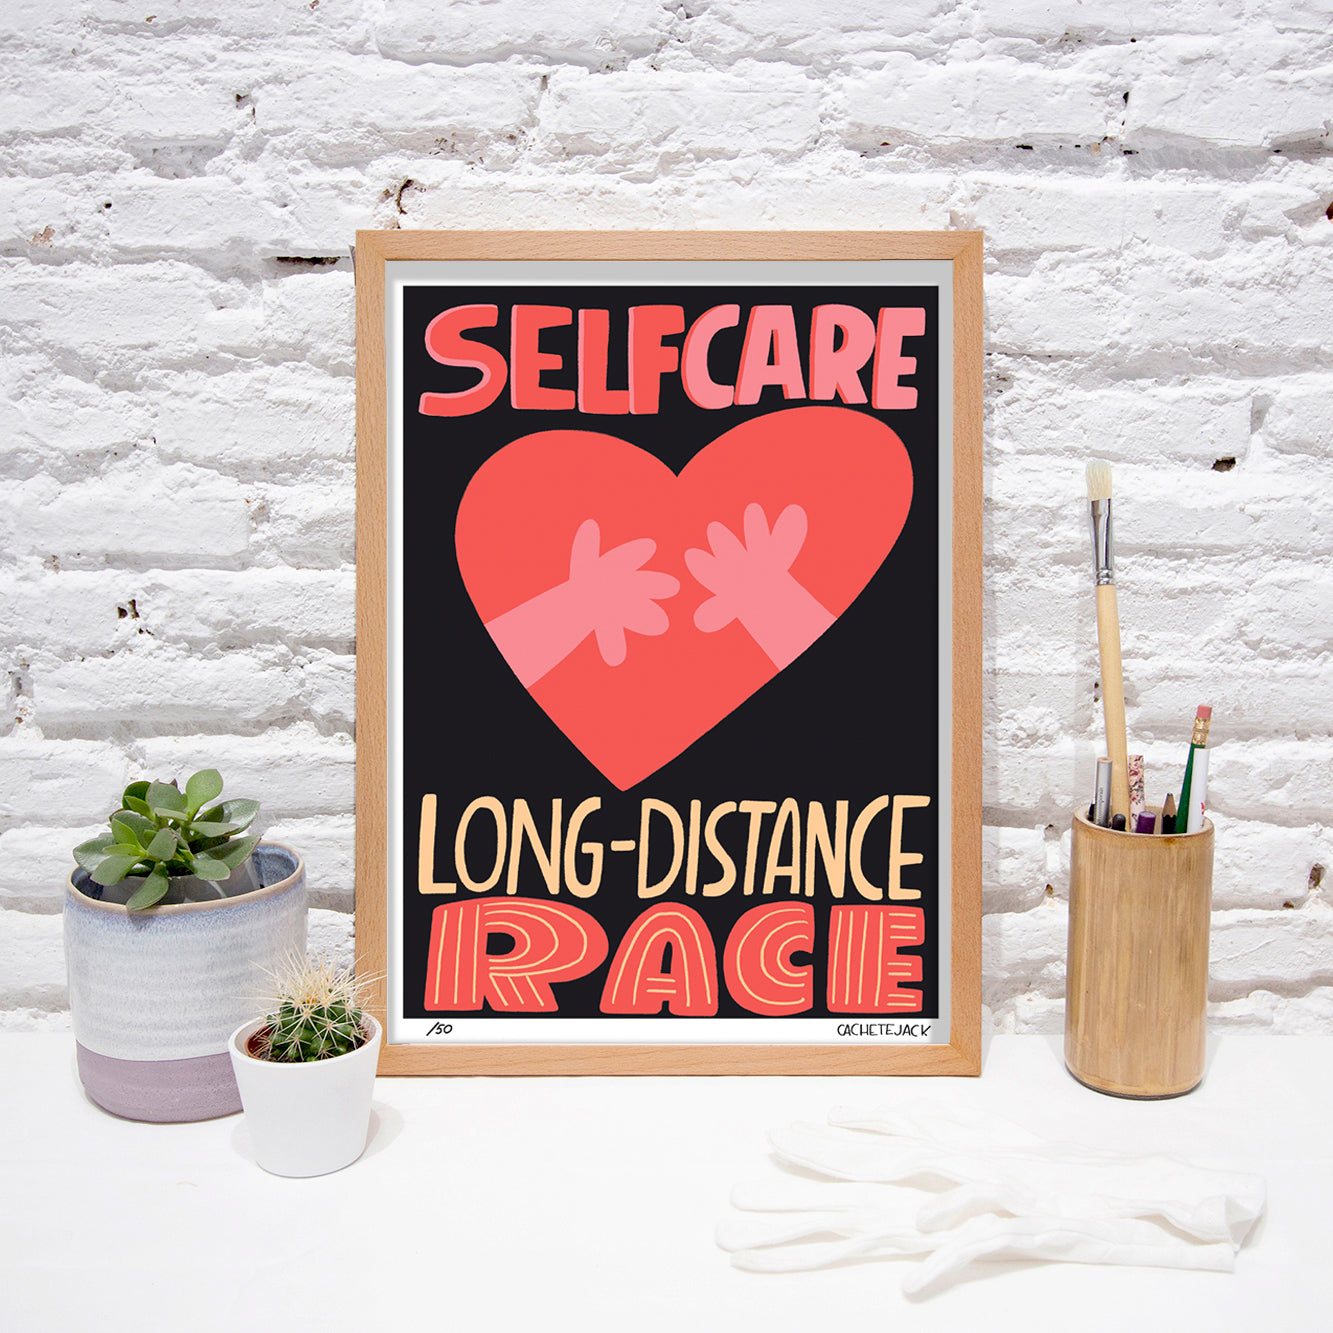 SELFCARE LONG-DISTANCE RACE